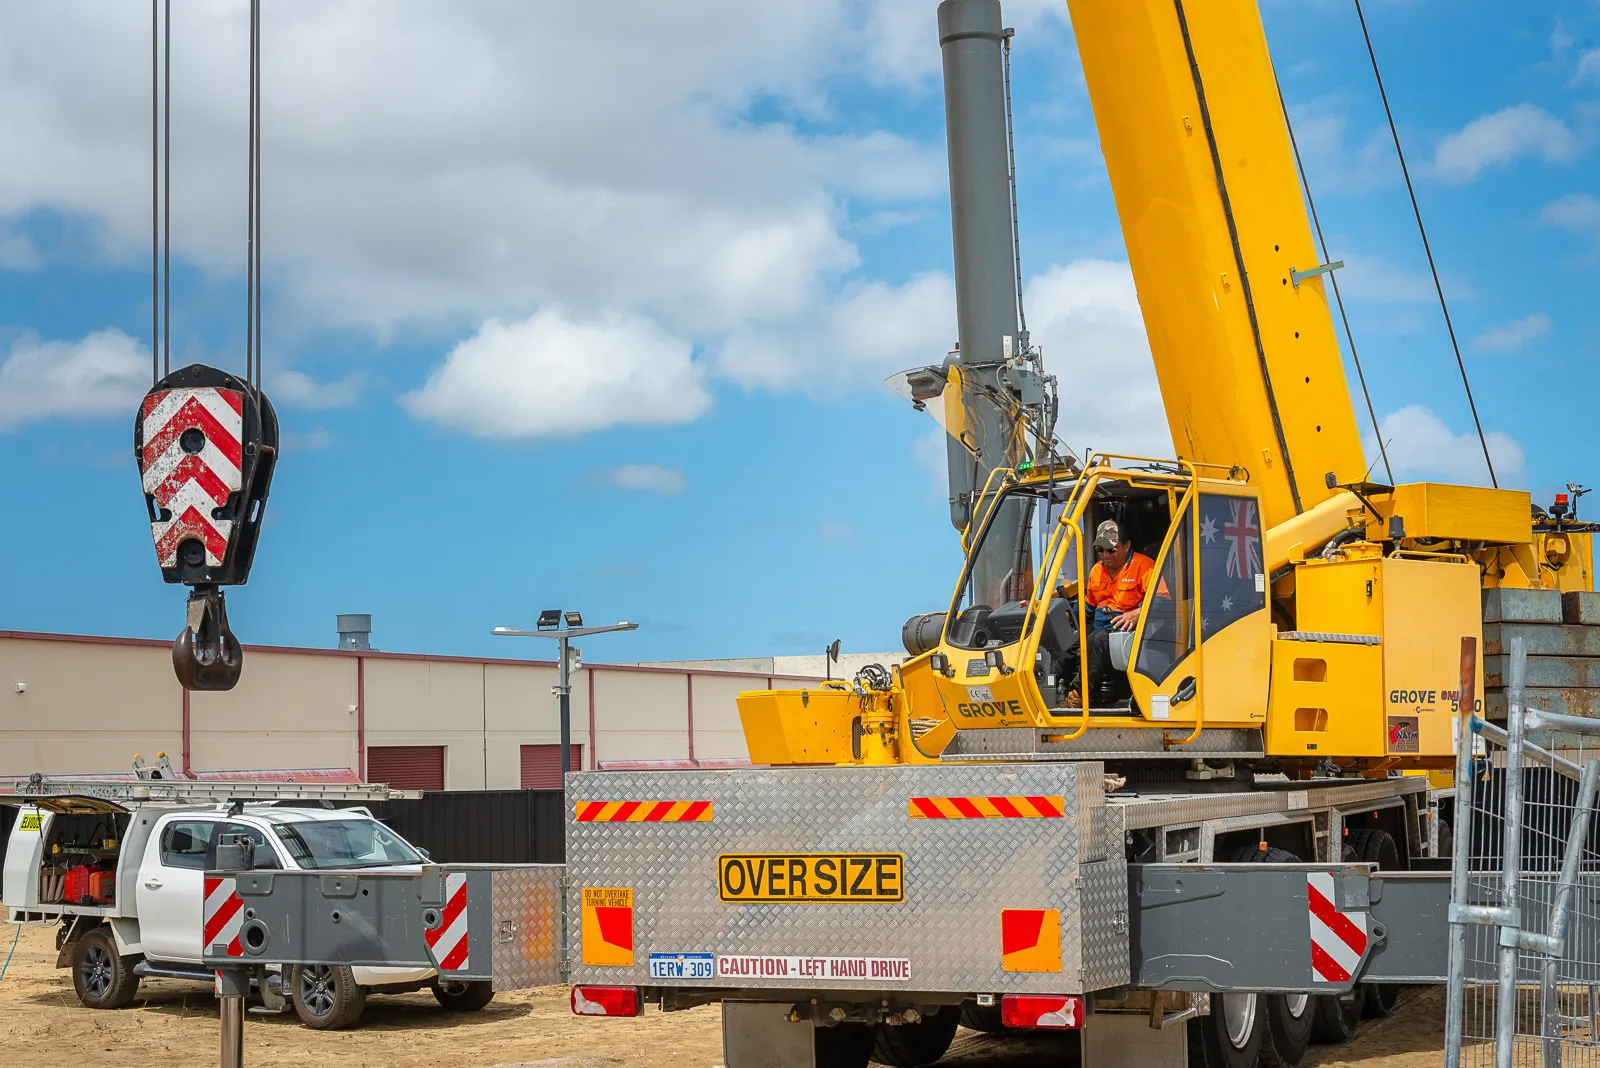 JD Rigging & Construction, Equipment Hire Australia Grove crane ready to lift